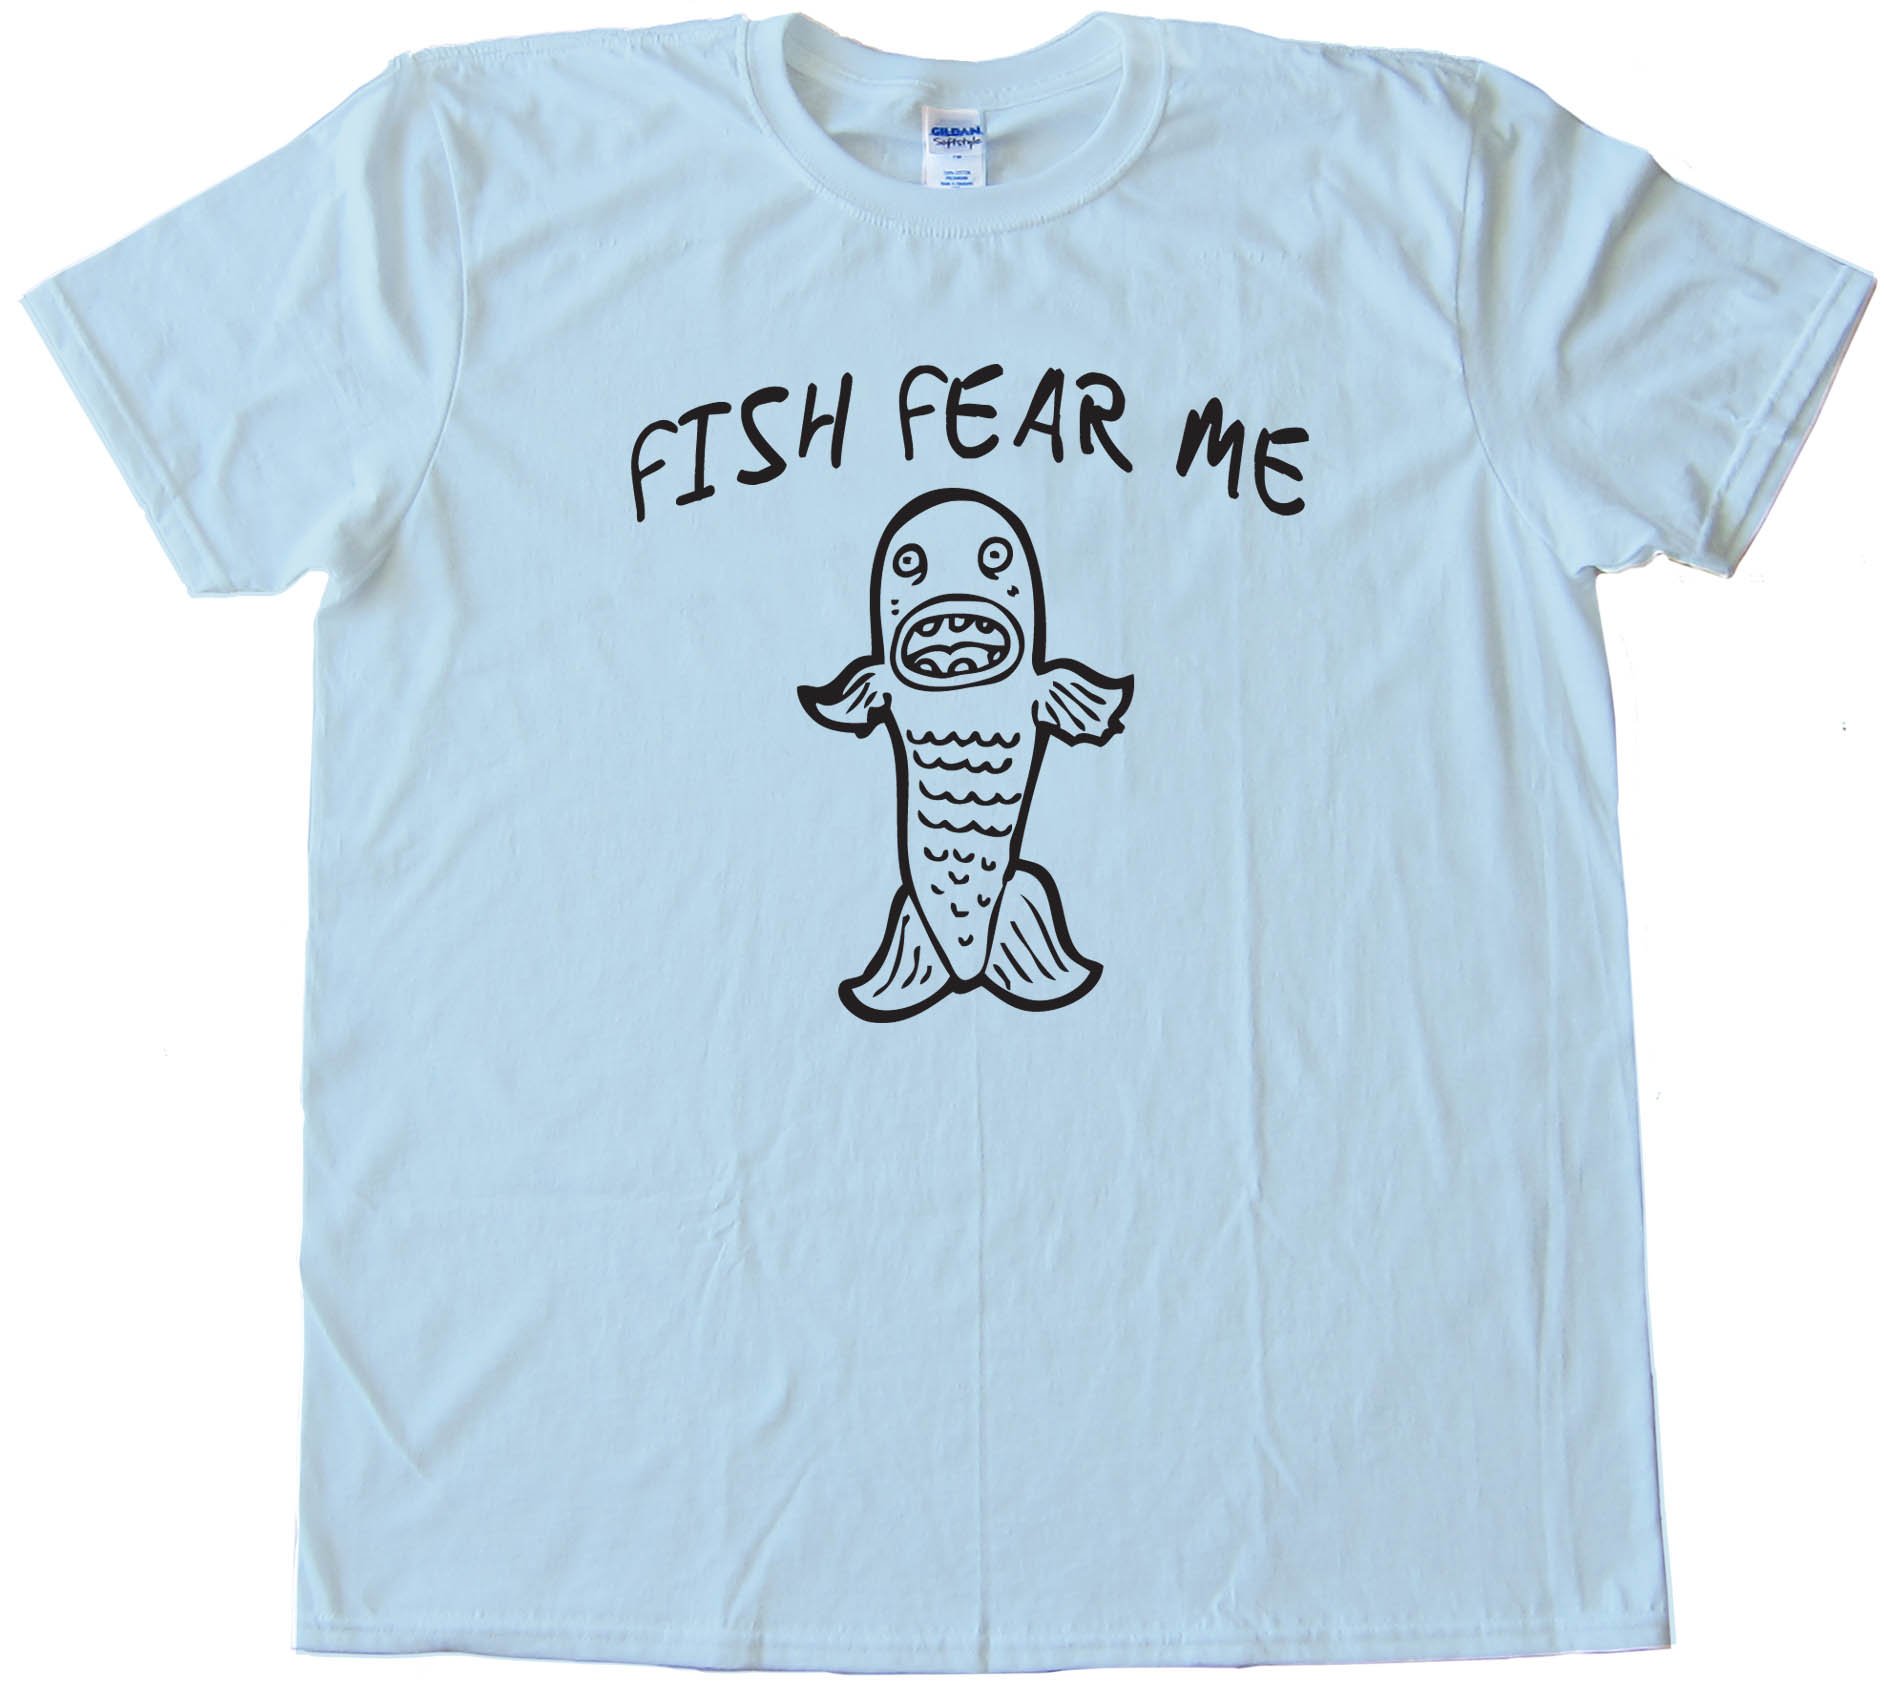 Fish Fear Me - Tee Shirt